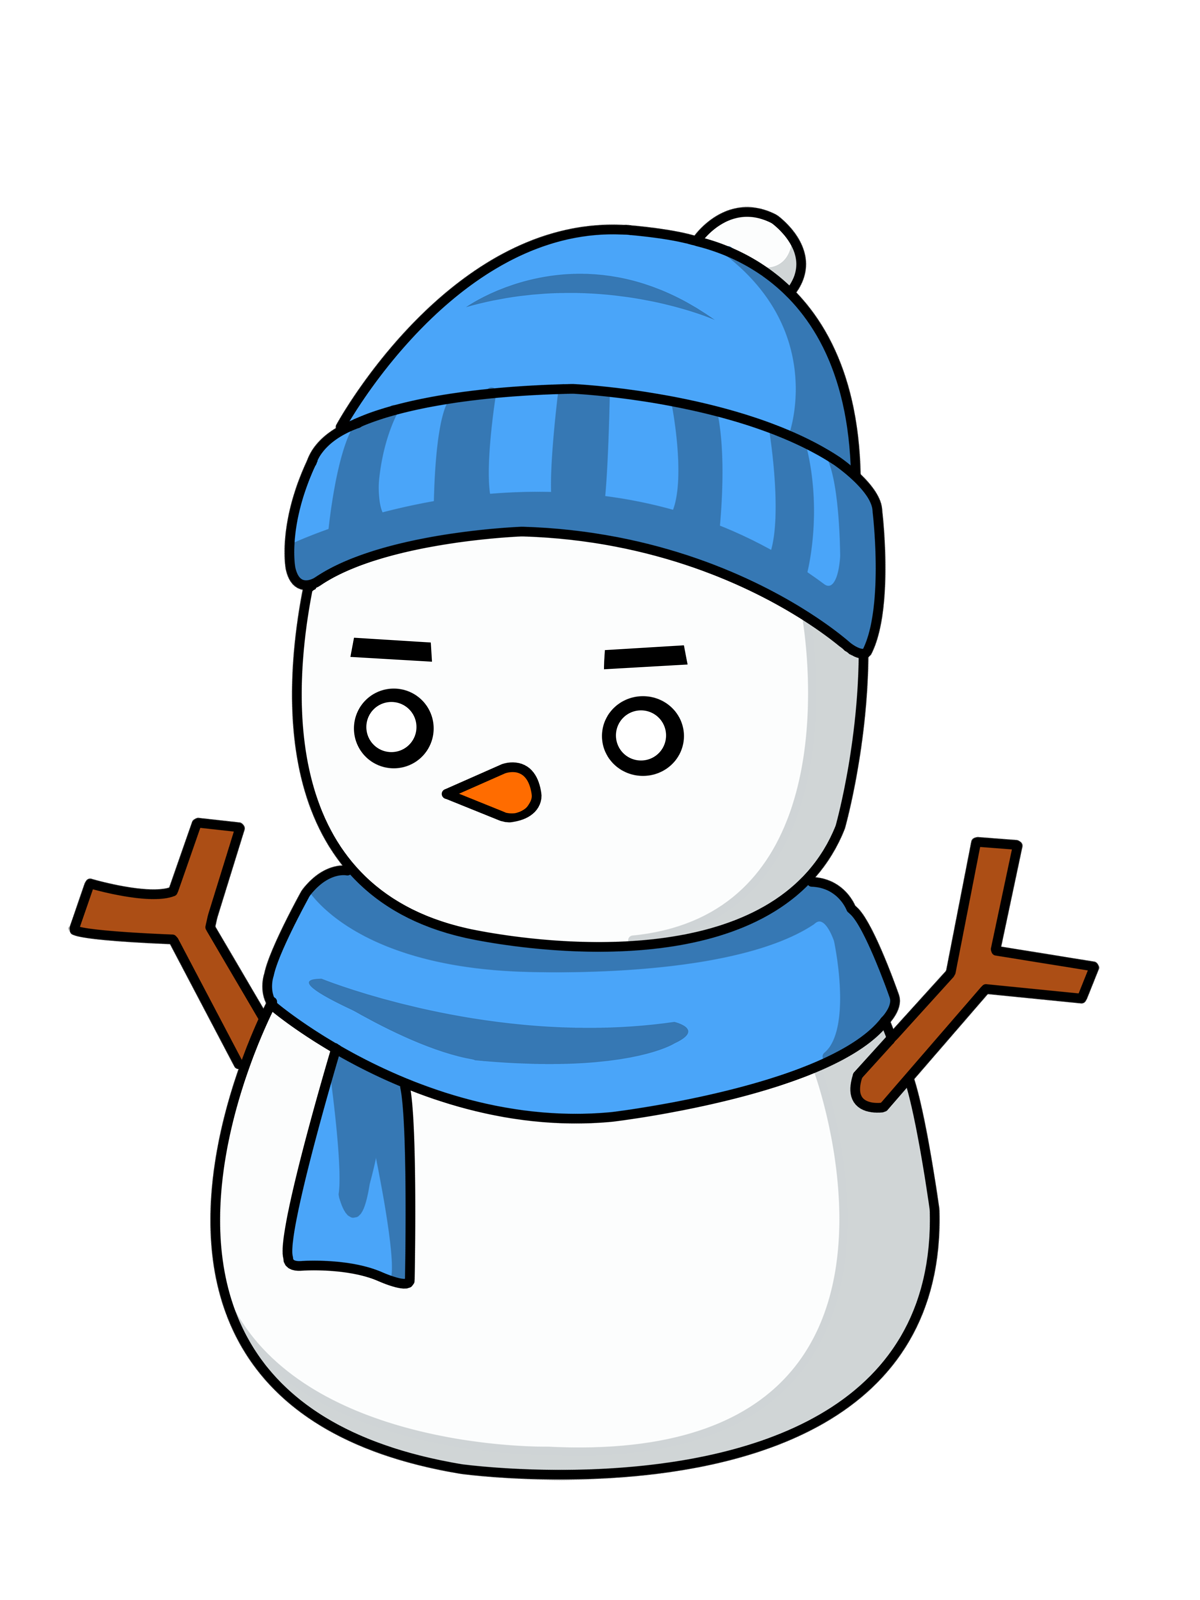 Snowman top hat clipart free images 2